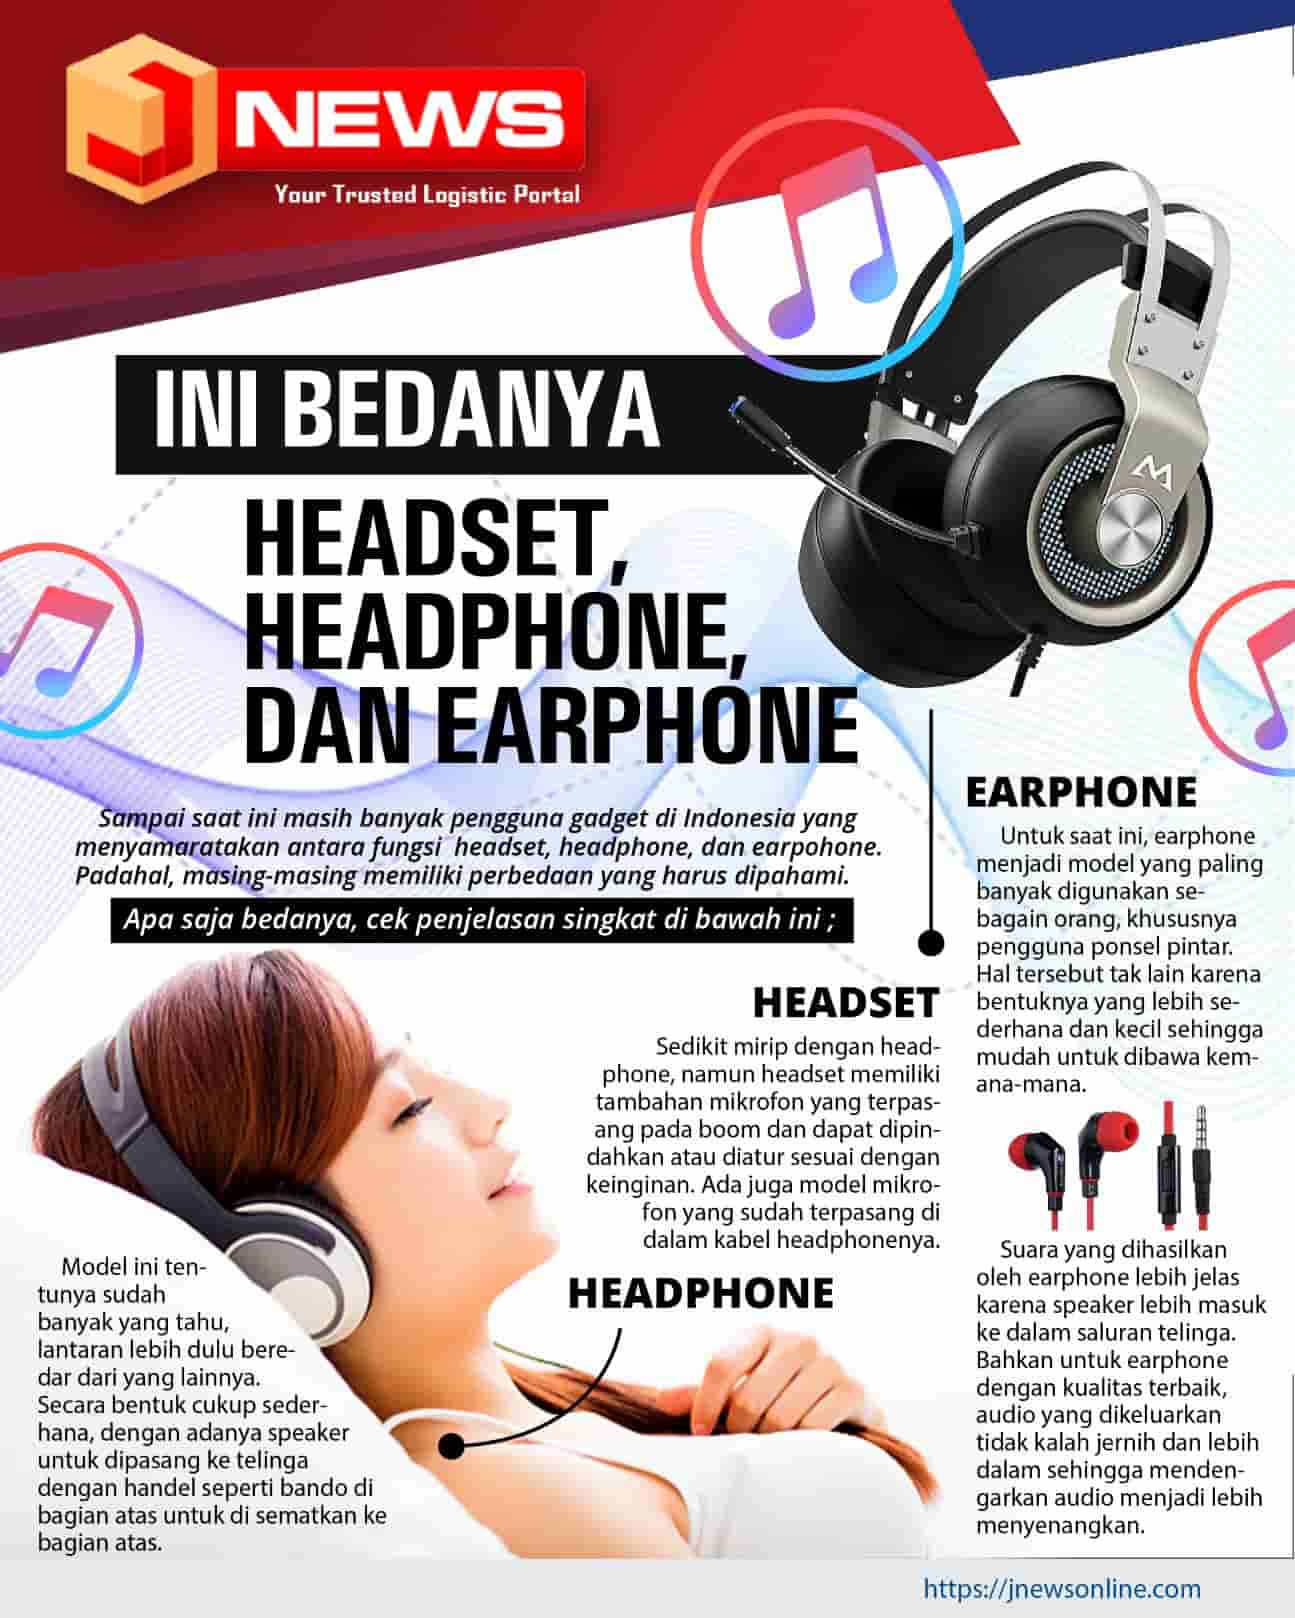 Bedanya Headset, Headphone, dan Earphone